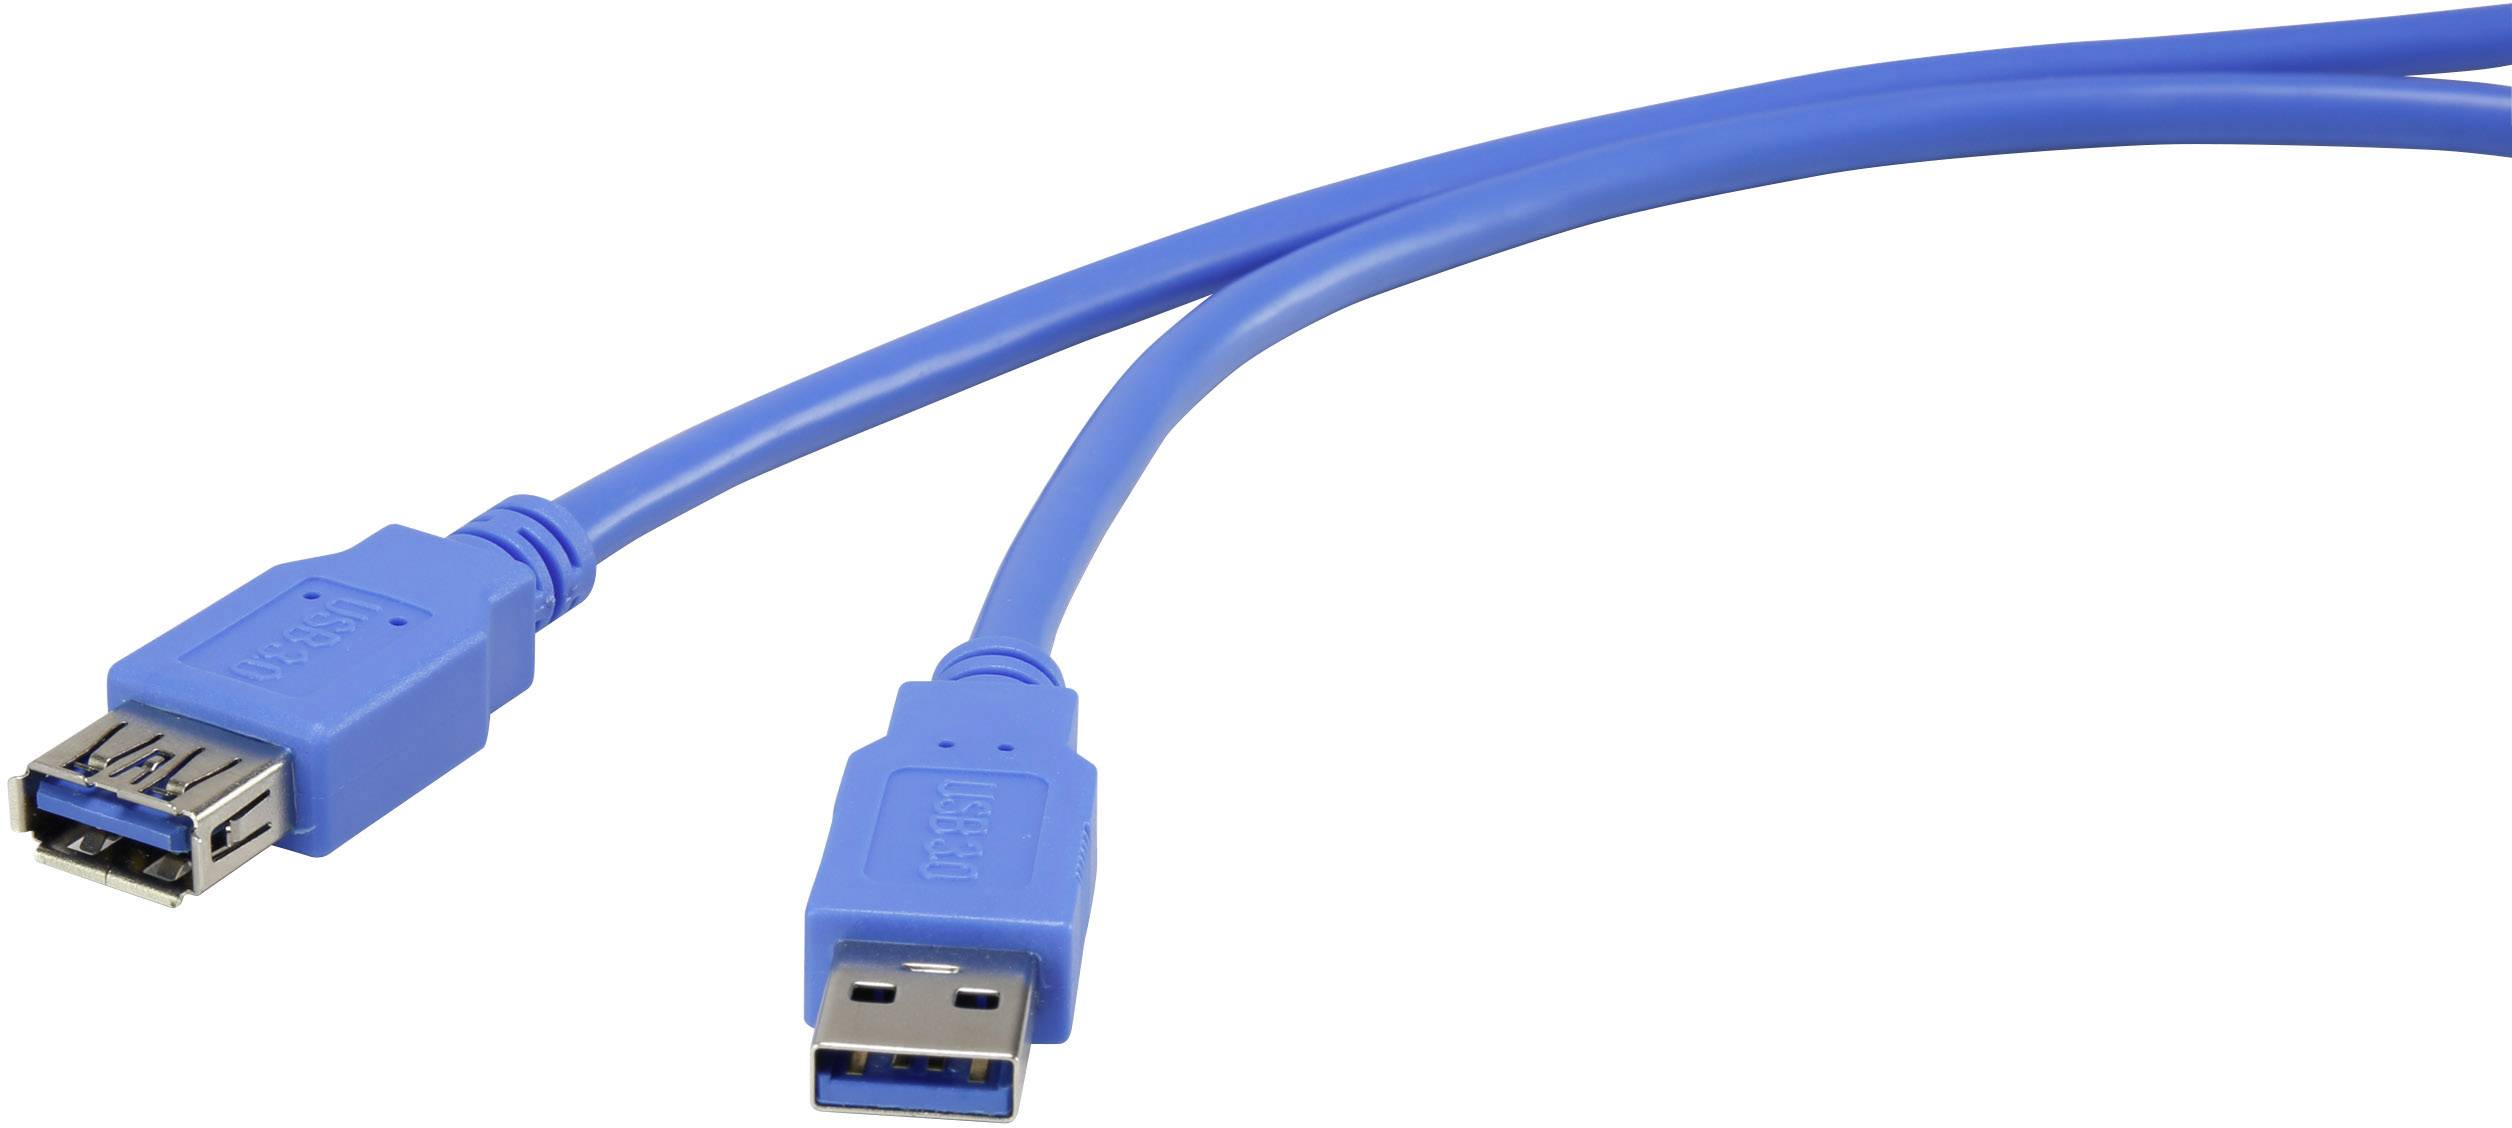 CONRAD Renkforce USB 3.0 Verlängerungskabel [1x USB 3.0 Stecker A - 1x USB 3.0 Buchse A] 3 m Blau ve